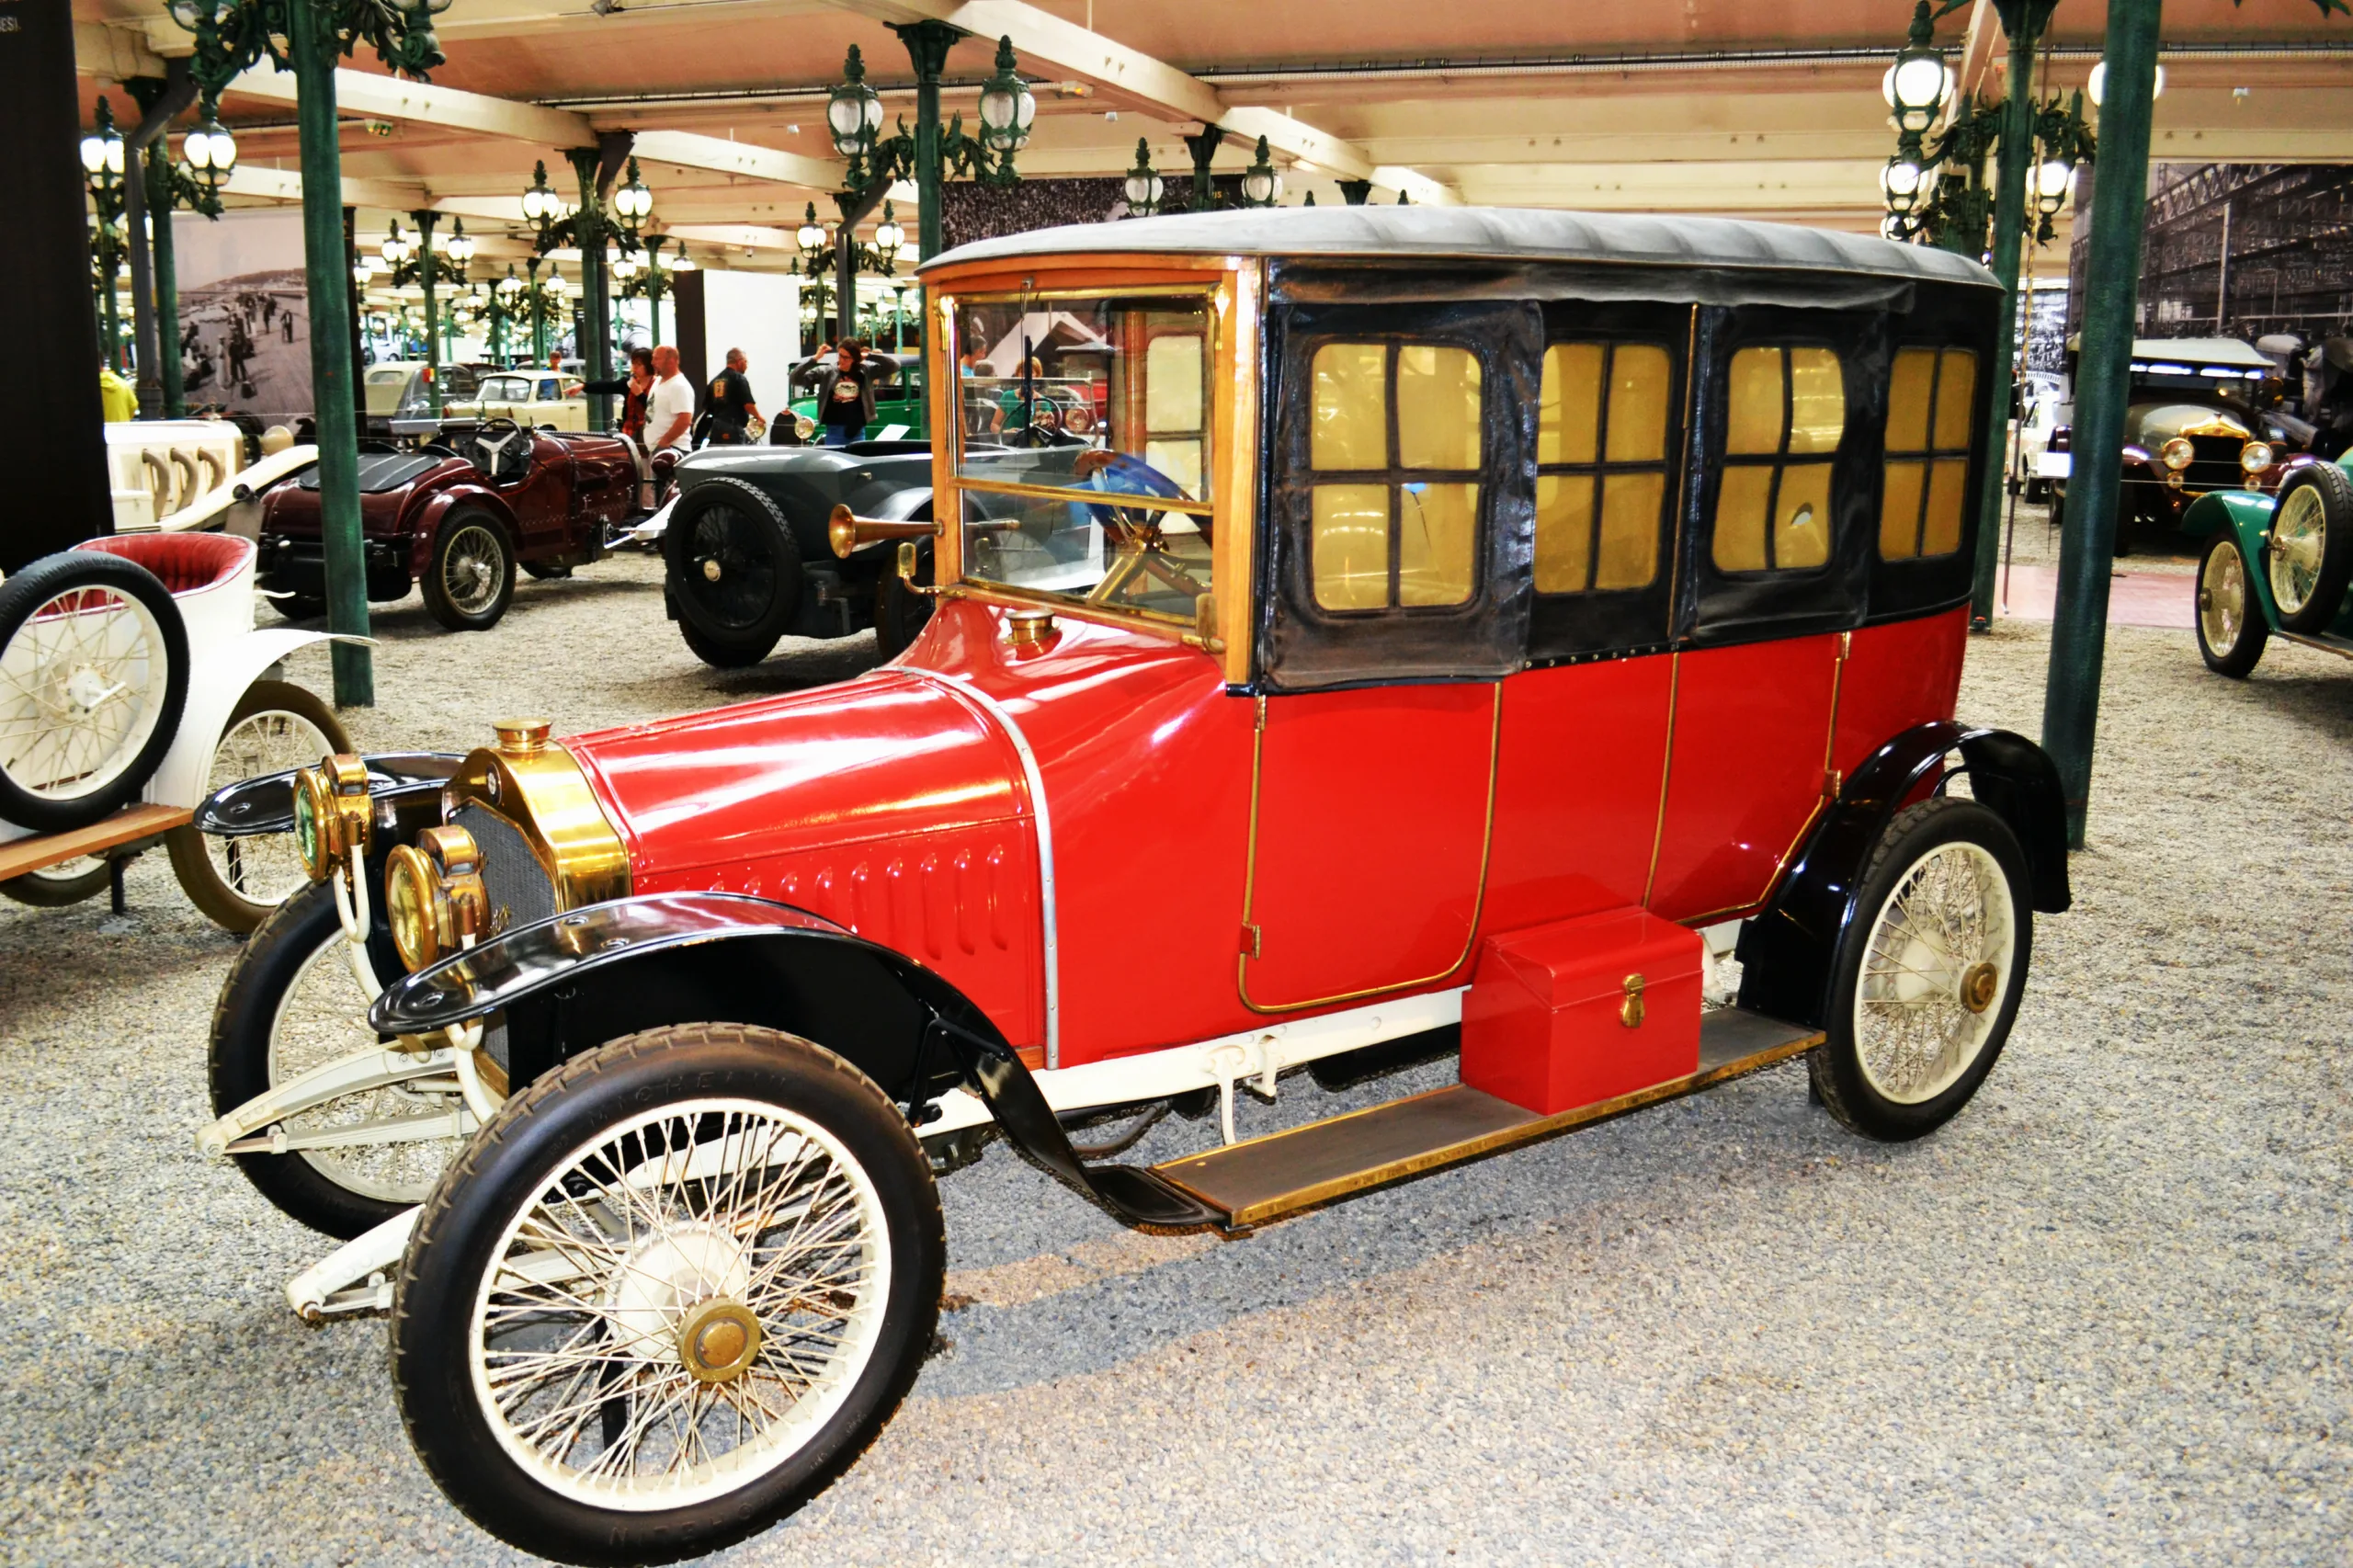 Cite de l’ Automobile, Μουσείο αυτοκινήτου στην Αλσατία 84